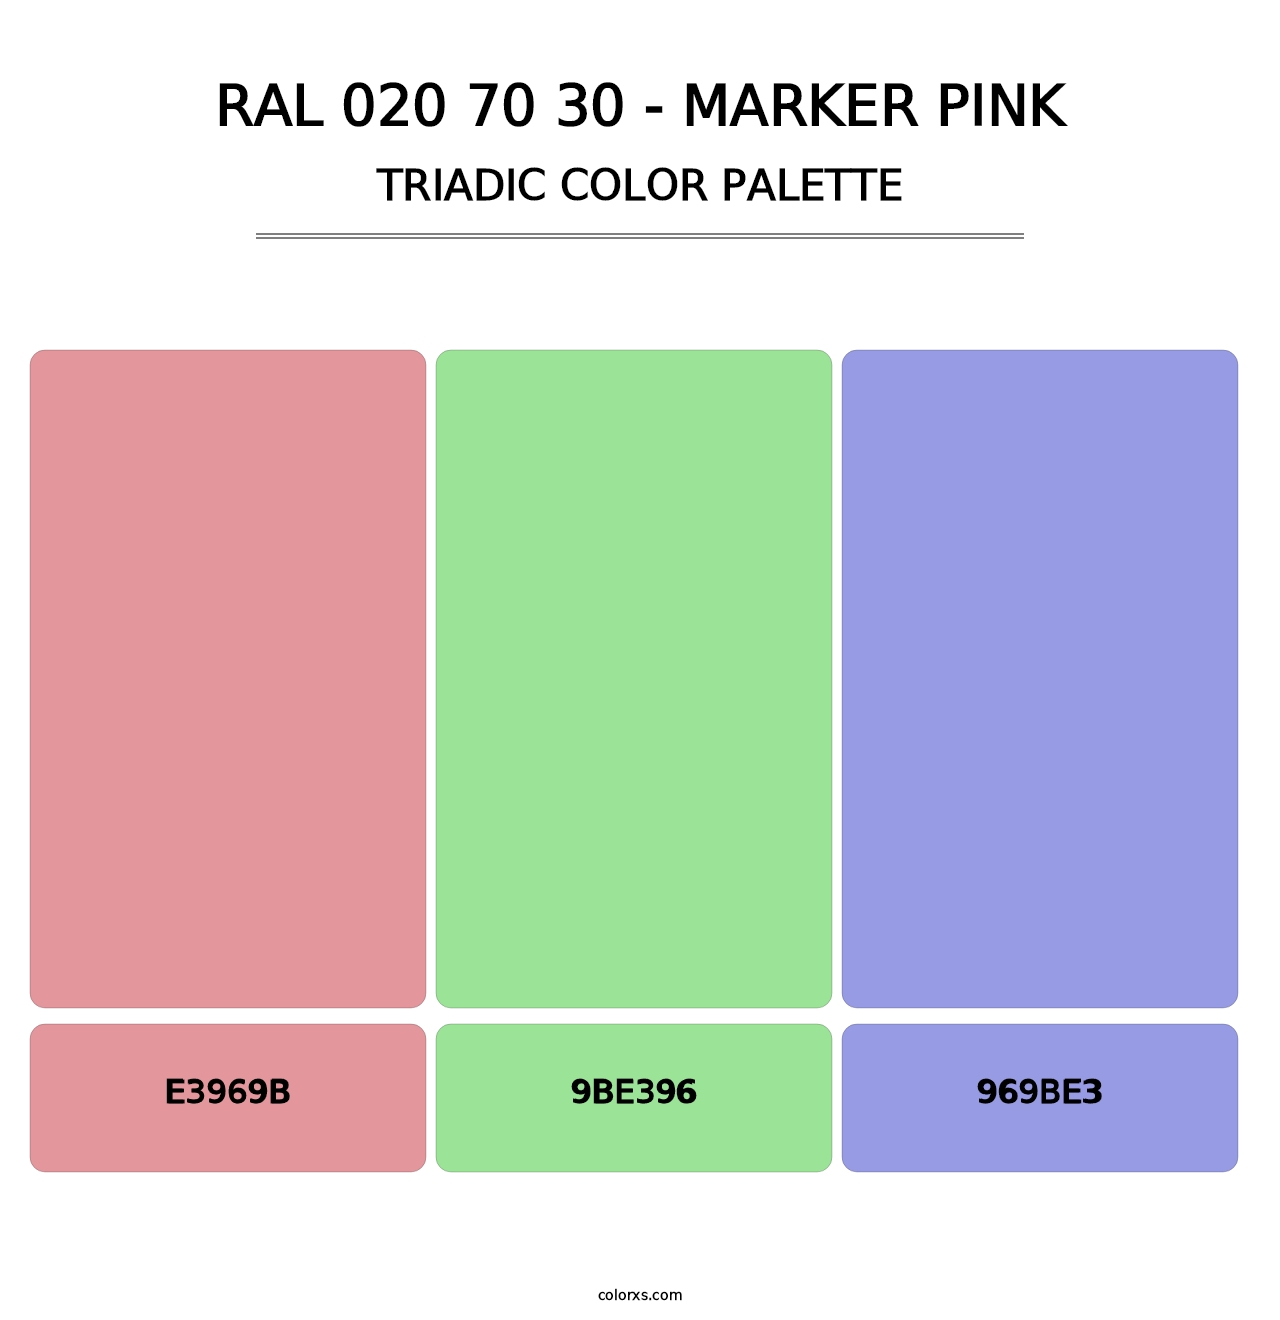 RAL 020 70 30 - Marker Pink - Triadic Color Palette